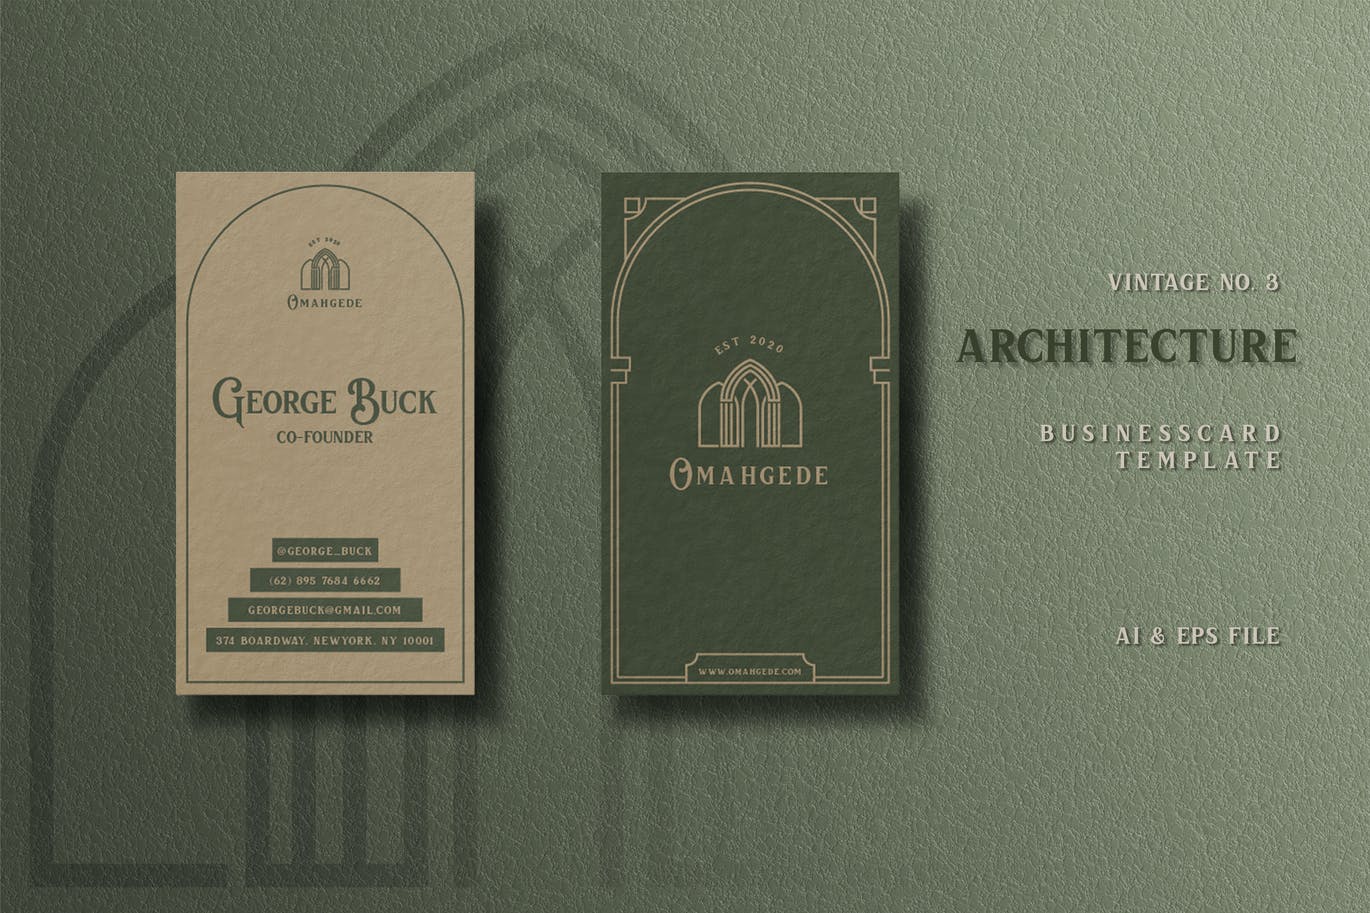 Vintage No. 3 - Architecture Business Card